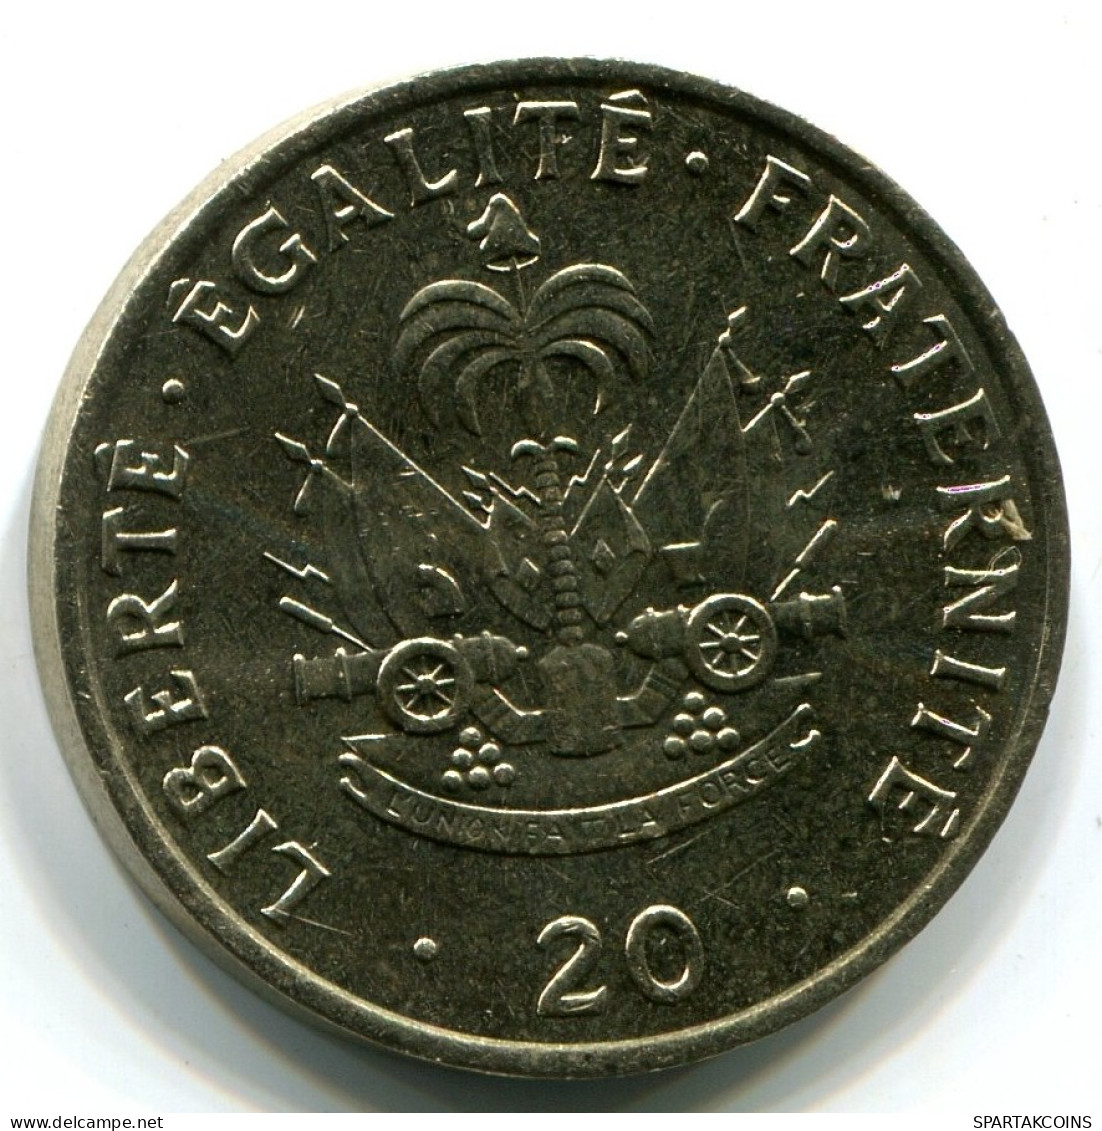 20 CENTIMES 1991 HAITI UNC Coin #W11005.U.A - Haití